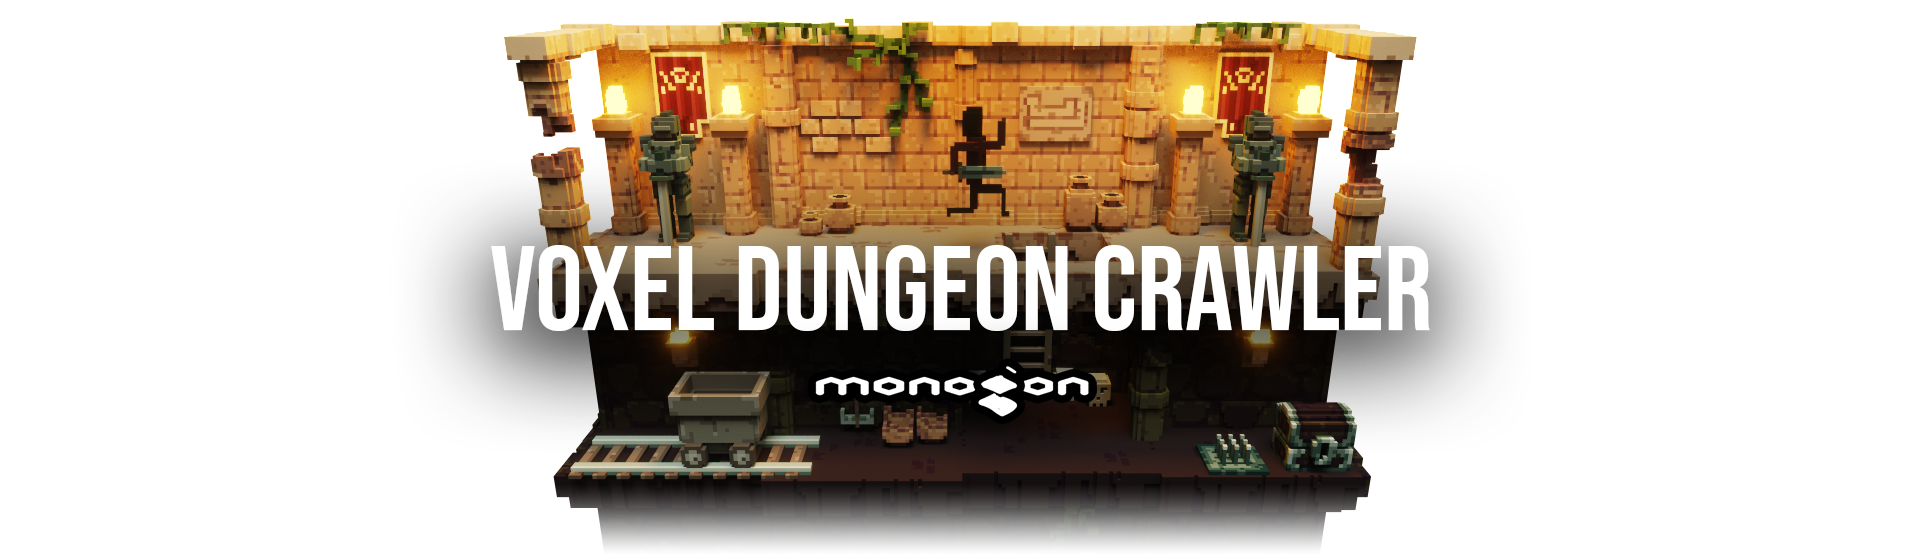 Voxel Dungeon Crawler - monogon